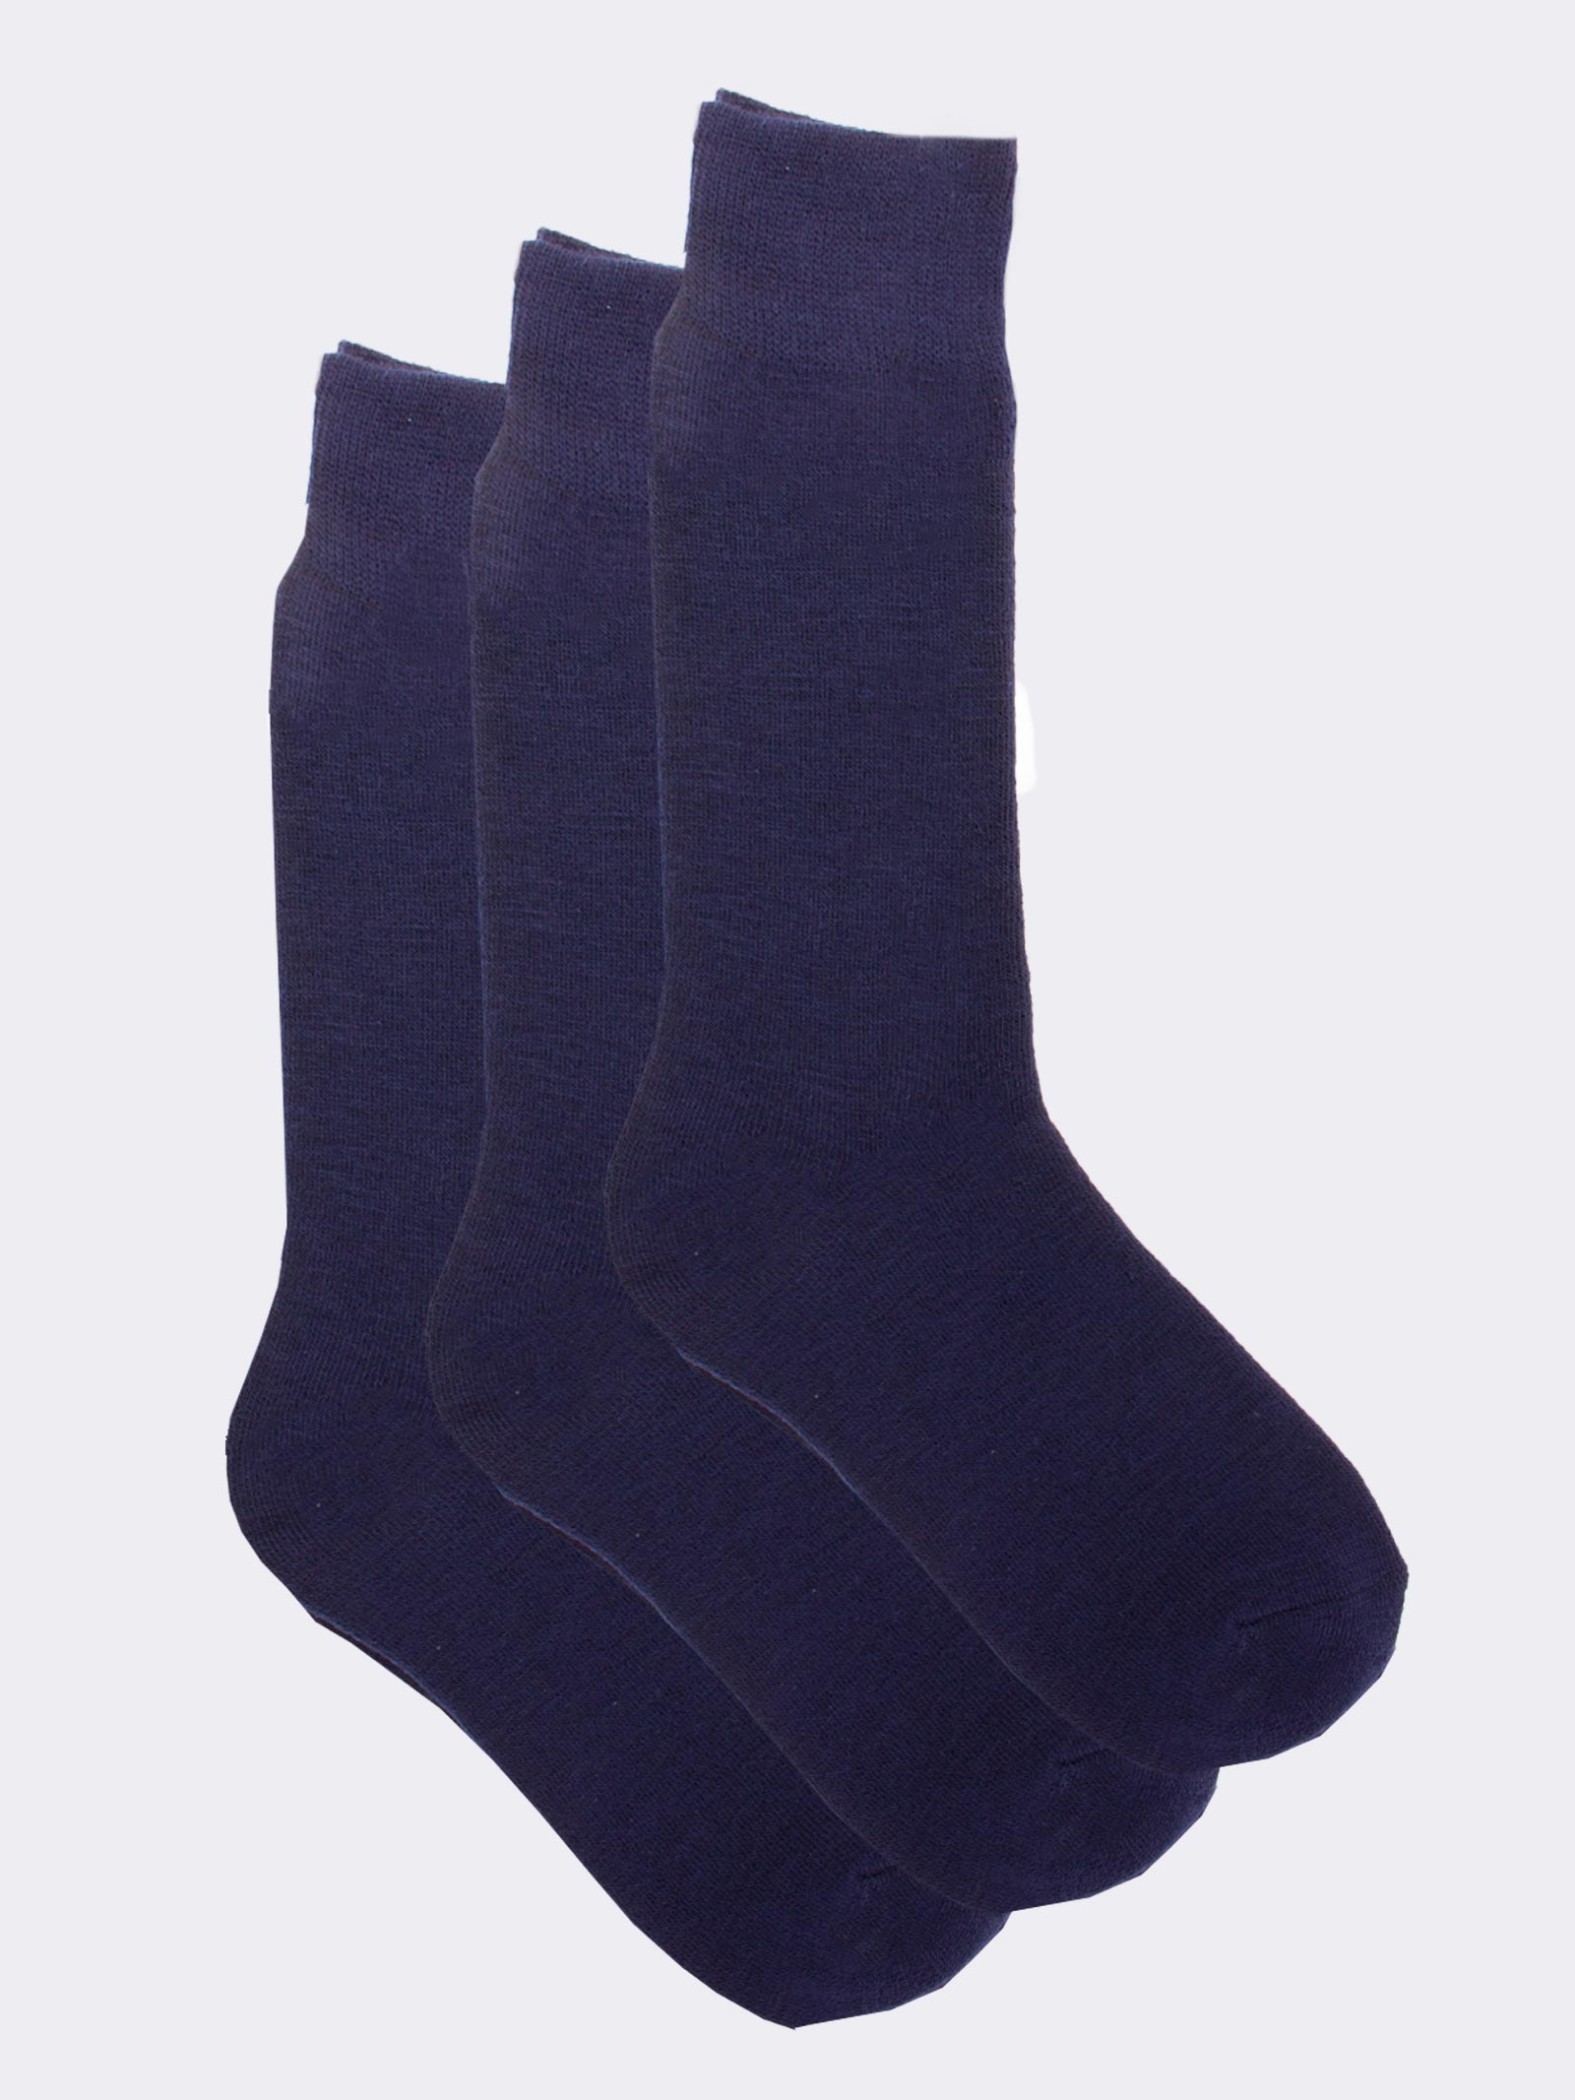 Warm soft fleece calf socks